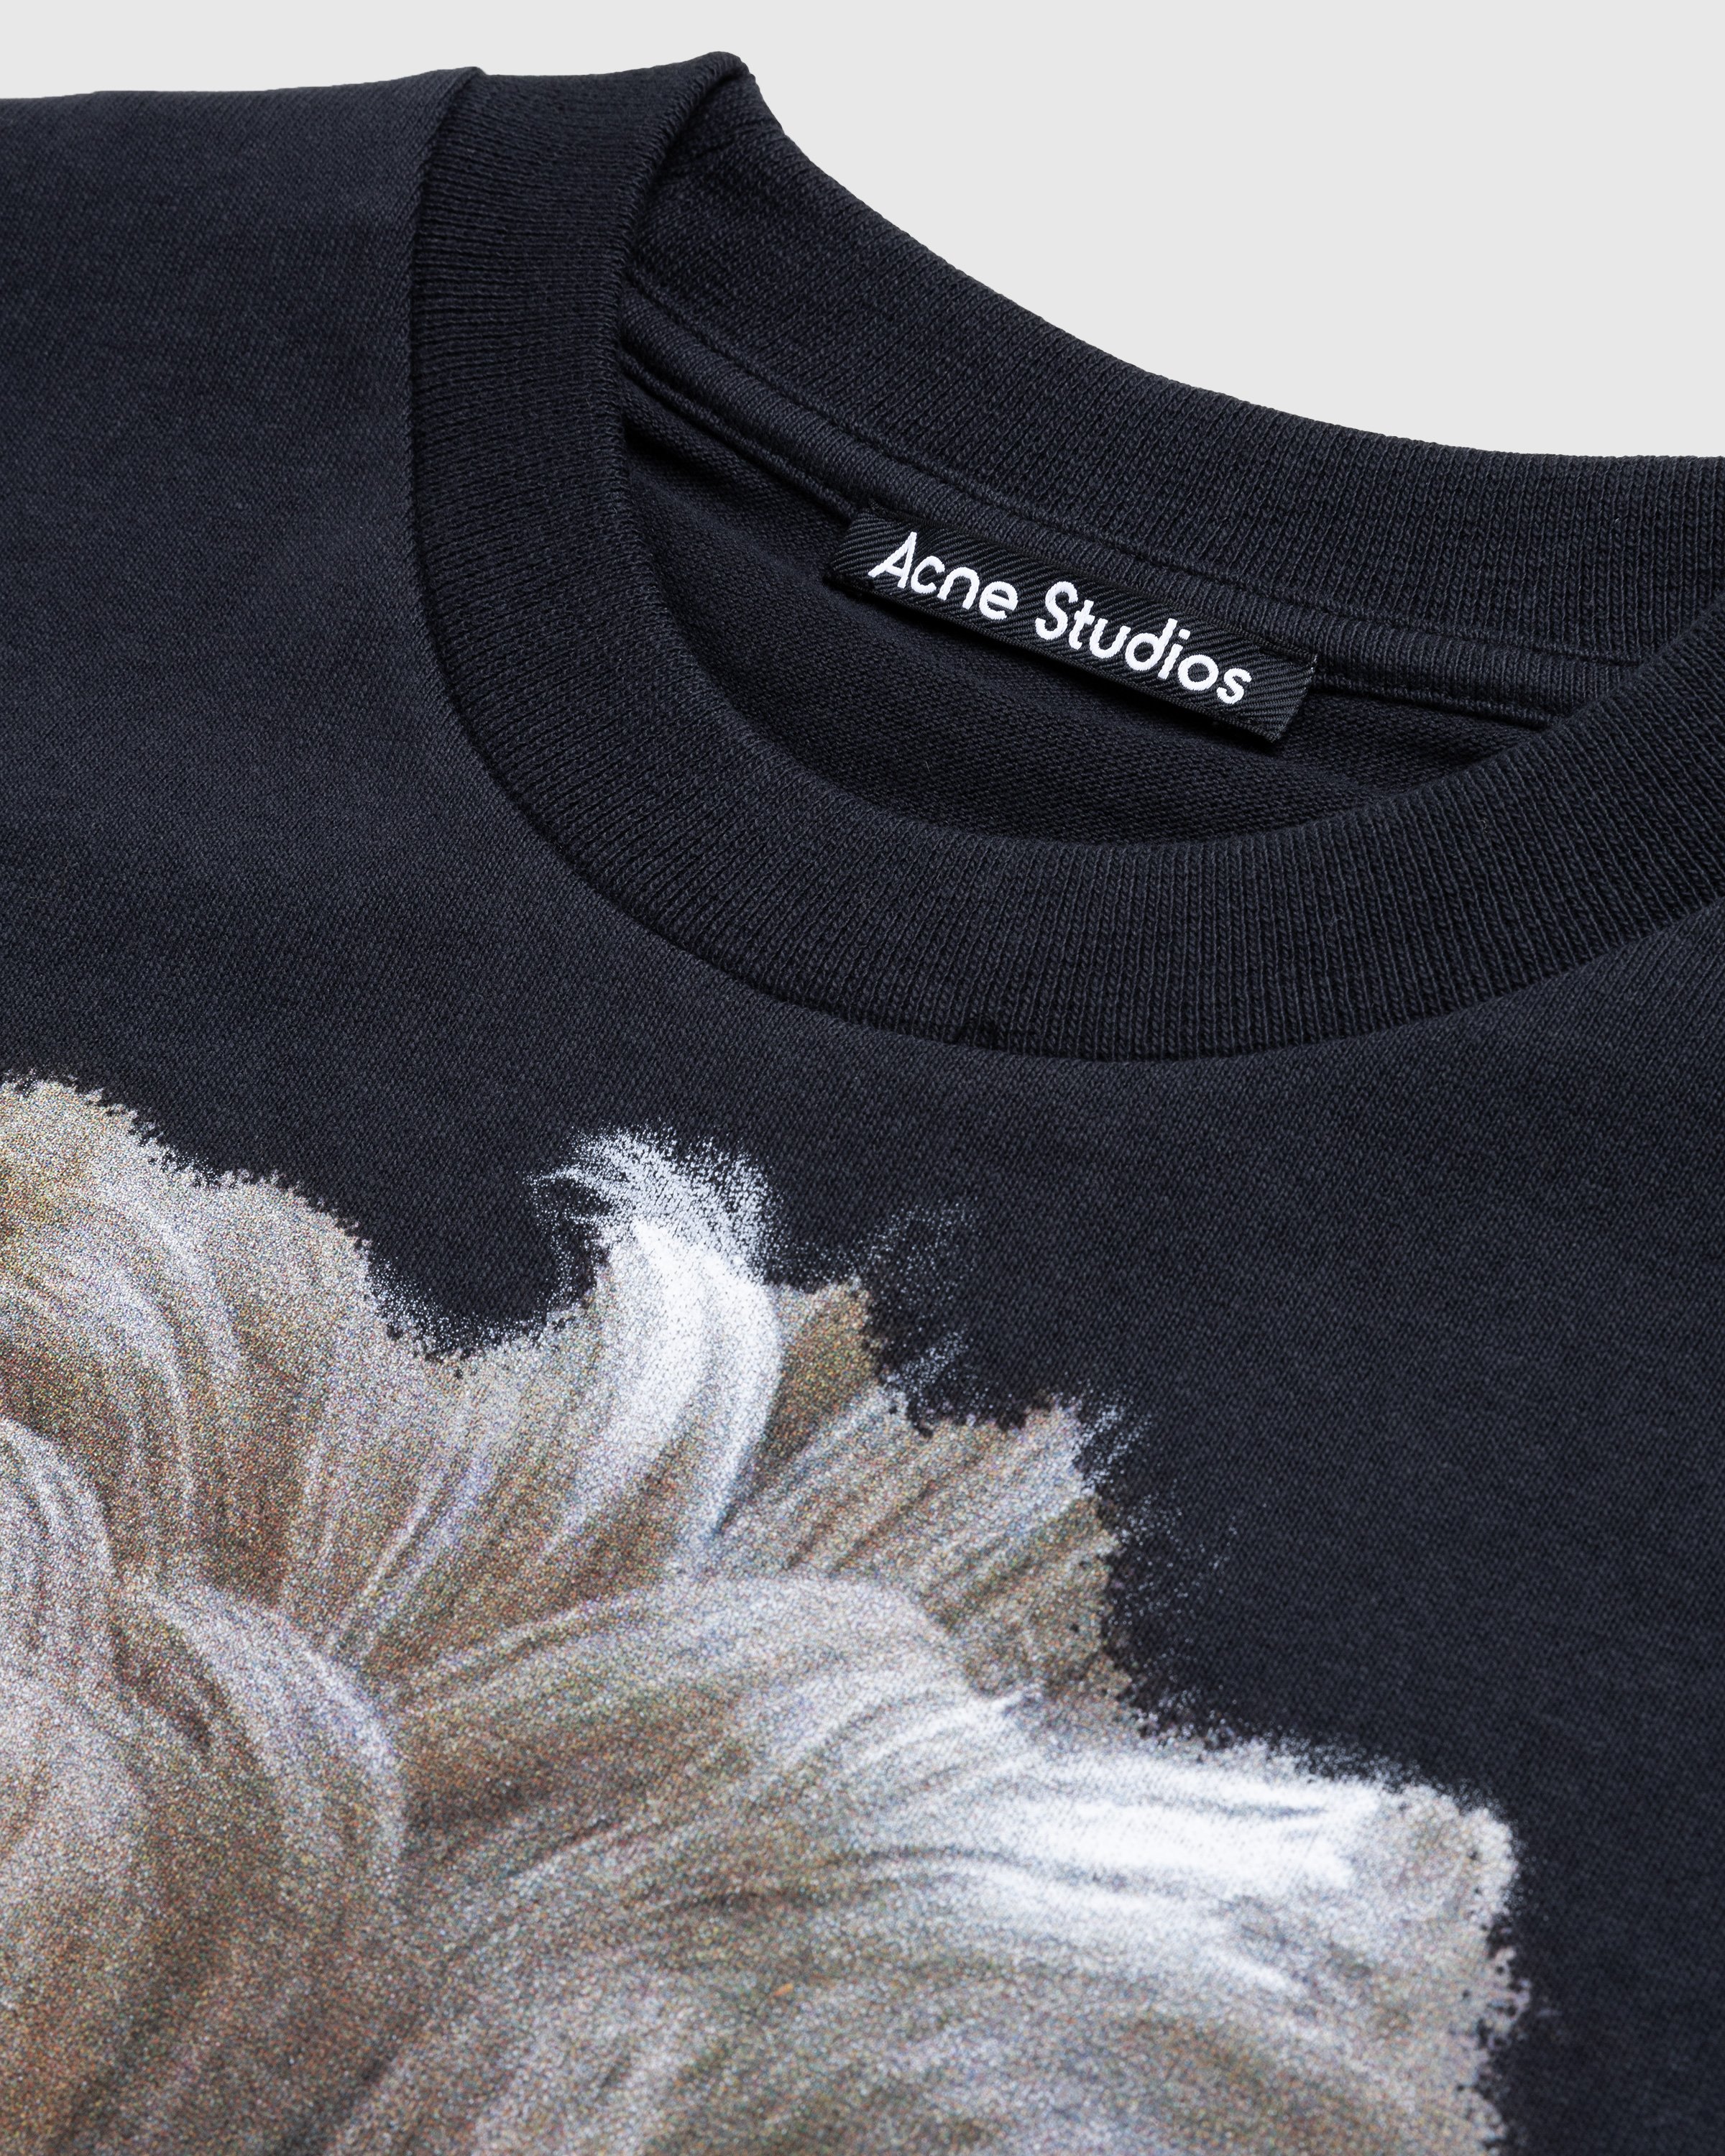 Acne Studios - Printed Dog T-Shirt Faded Black - Clothing - Black - Image 5